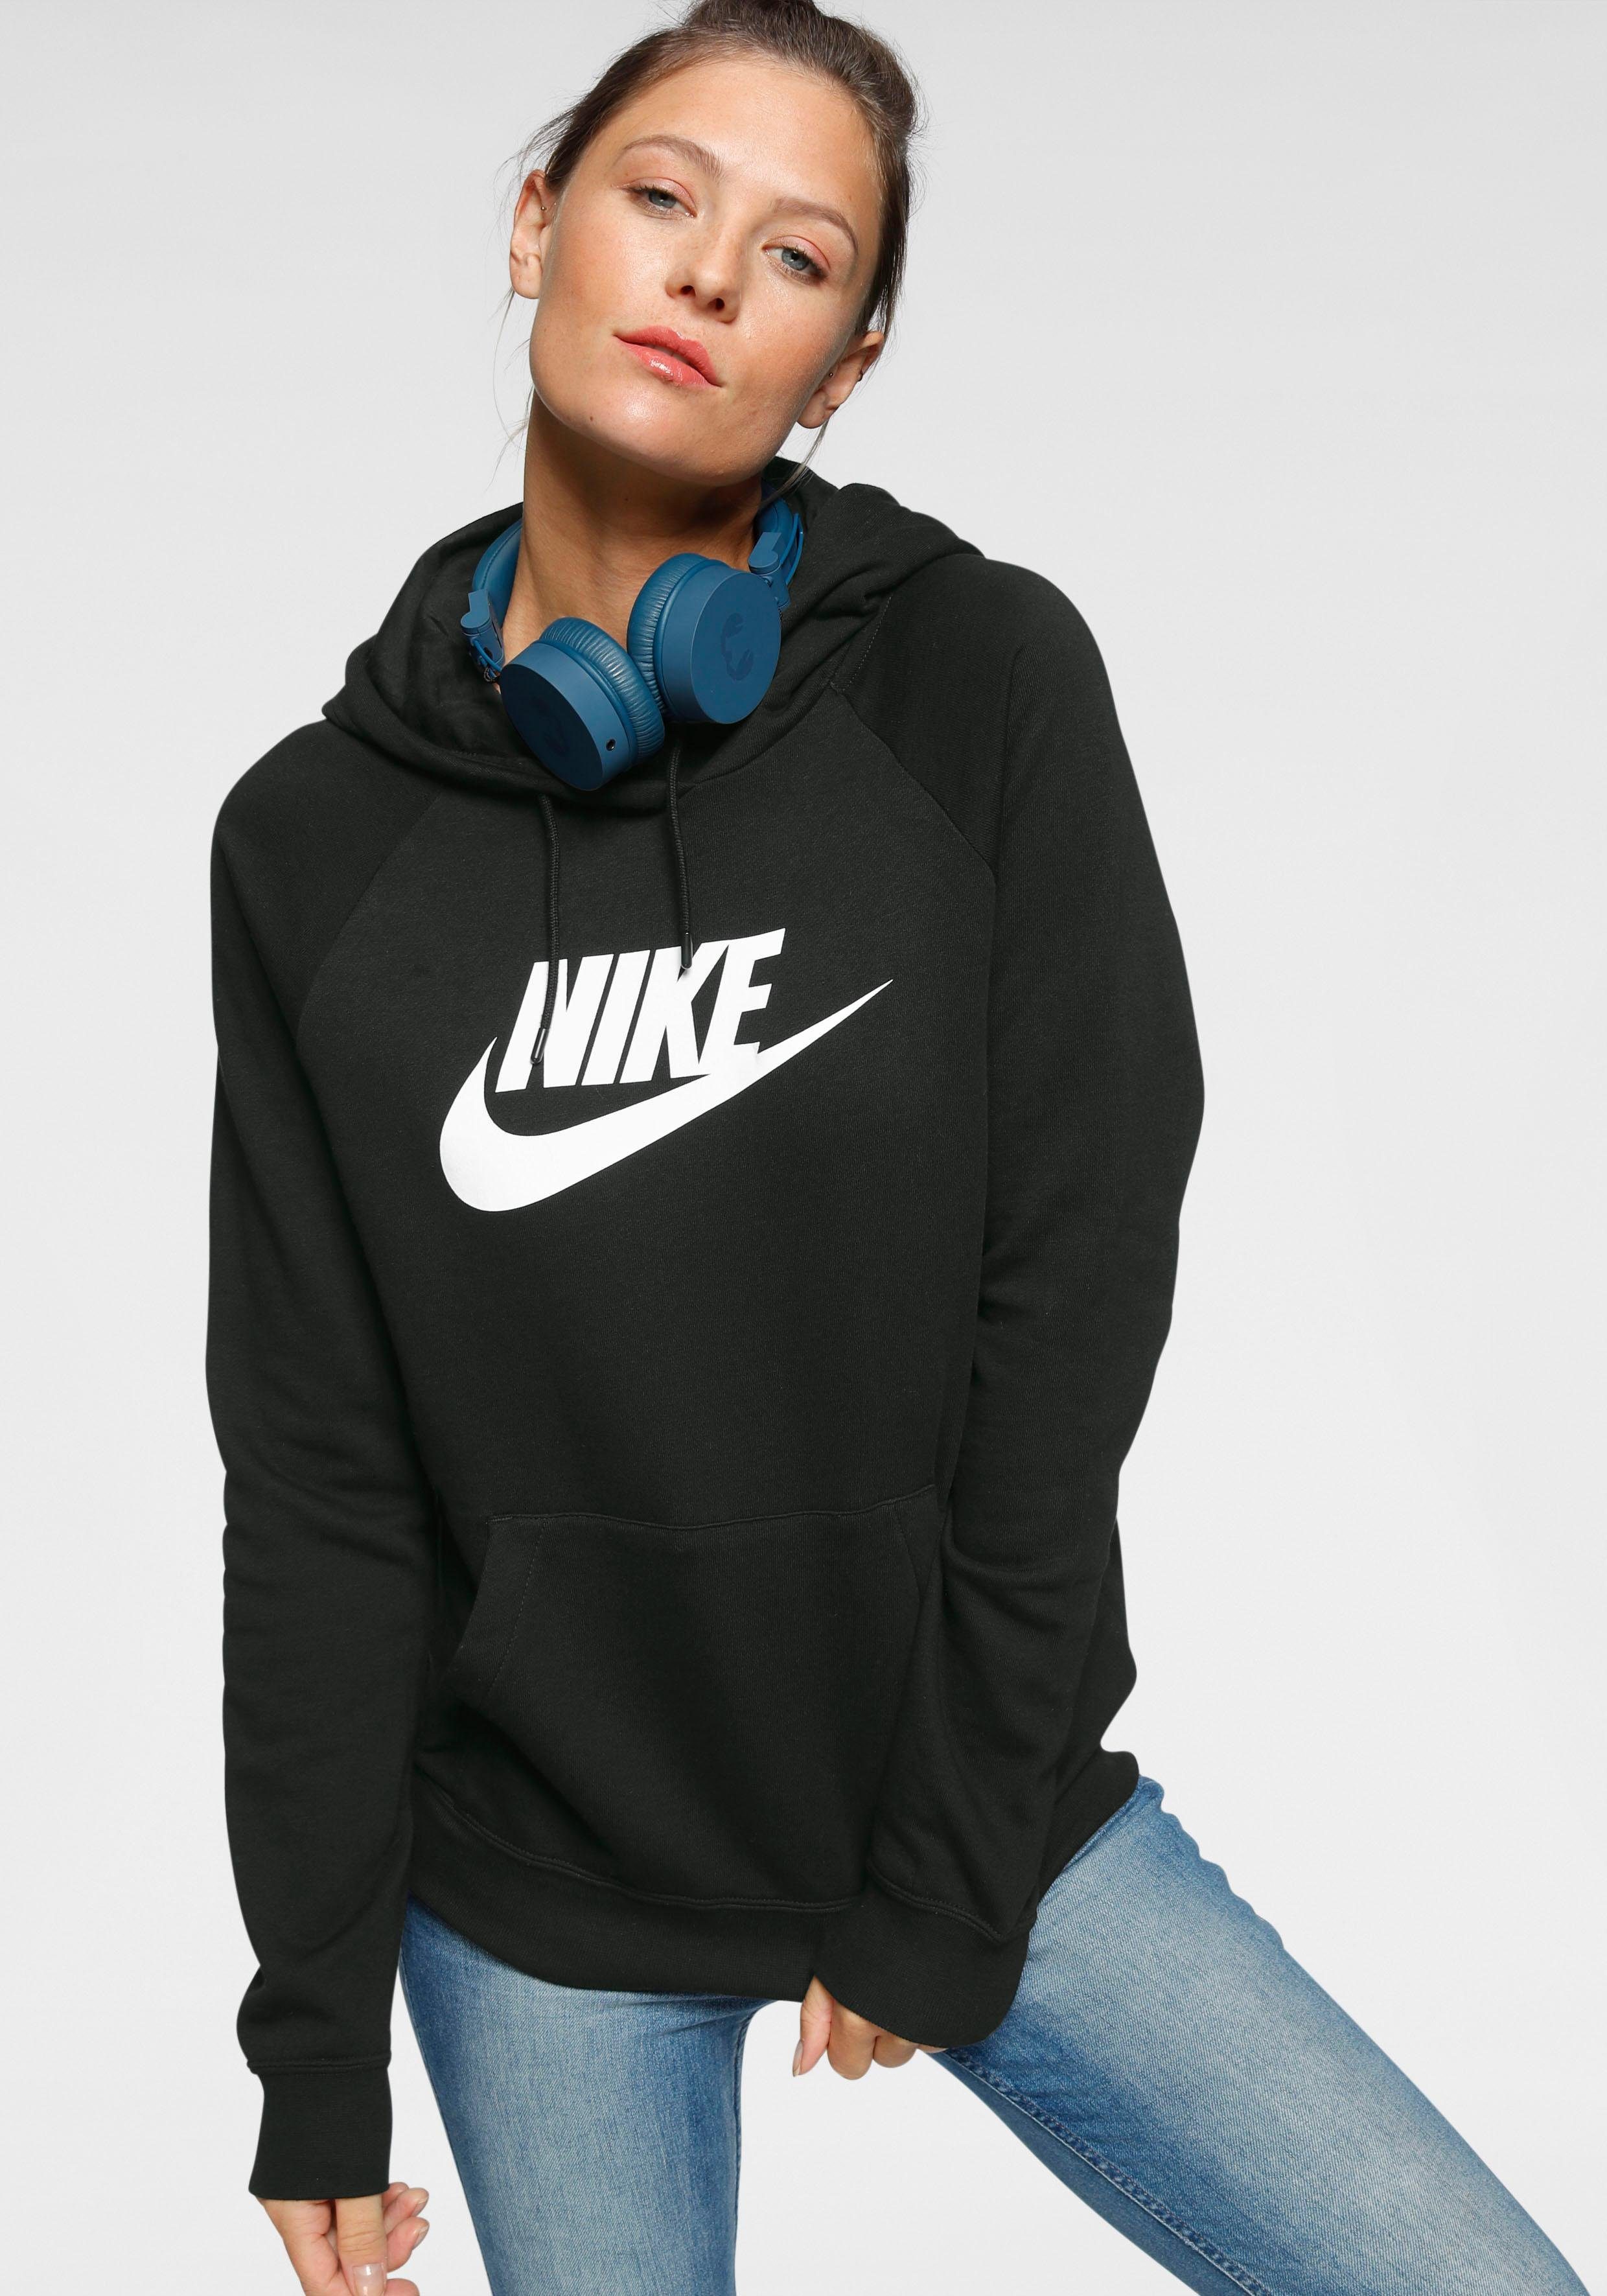 Nike Hoodies online kaufen » Nike Kapuzenpulli| OTTO